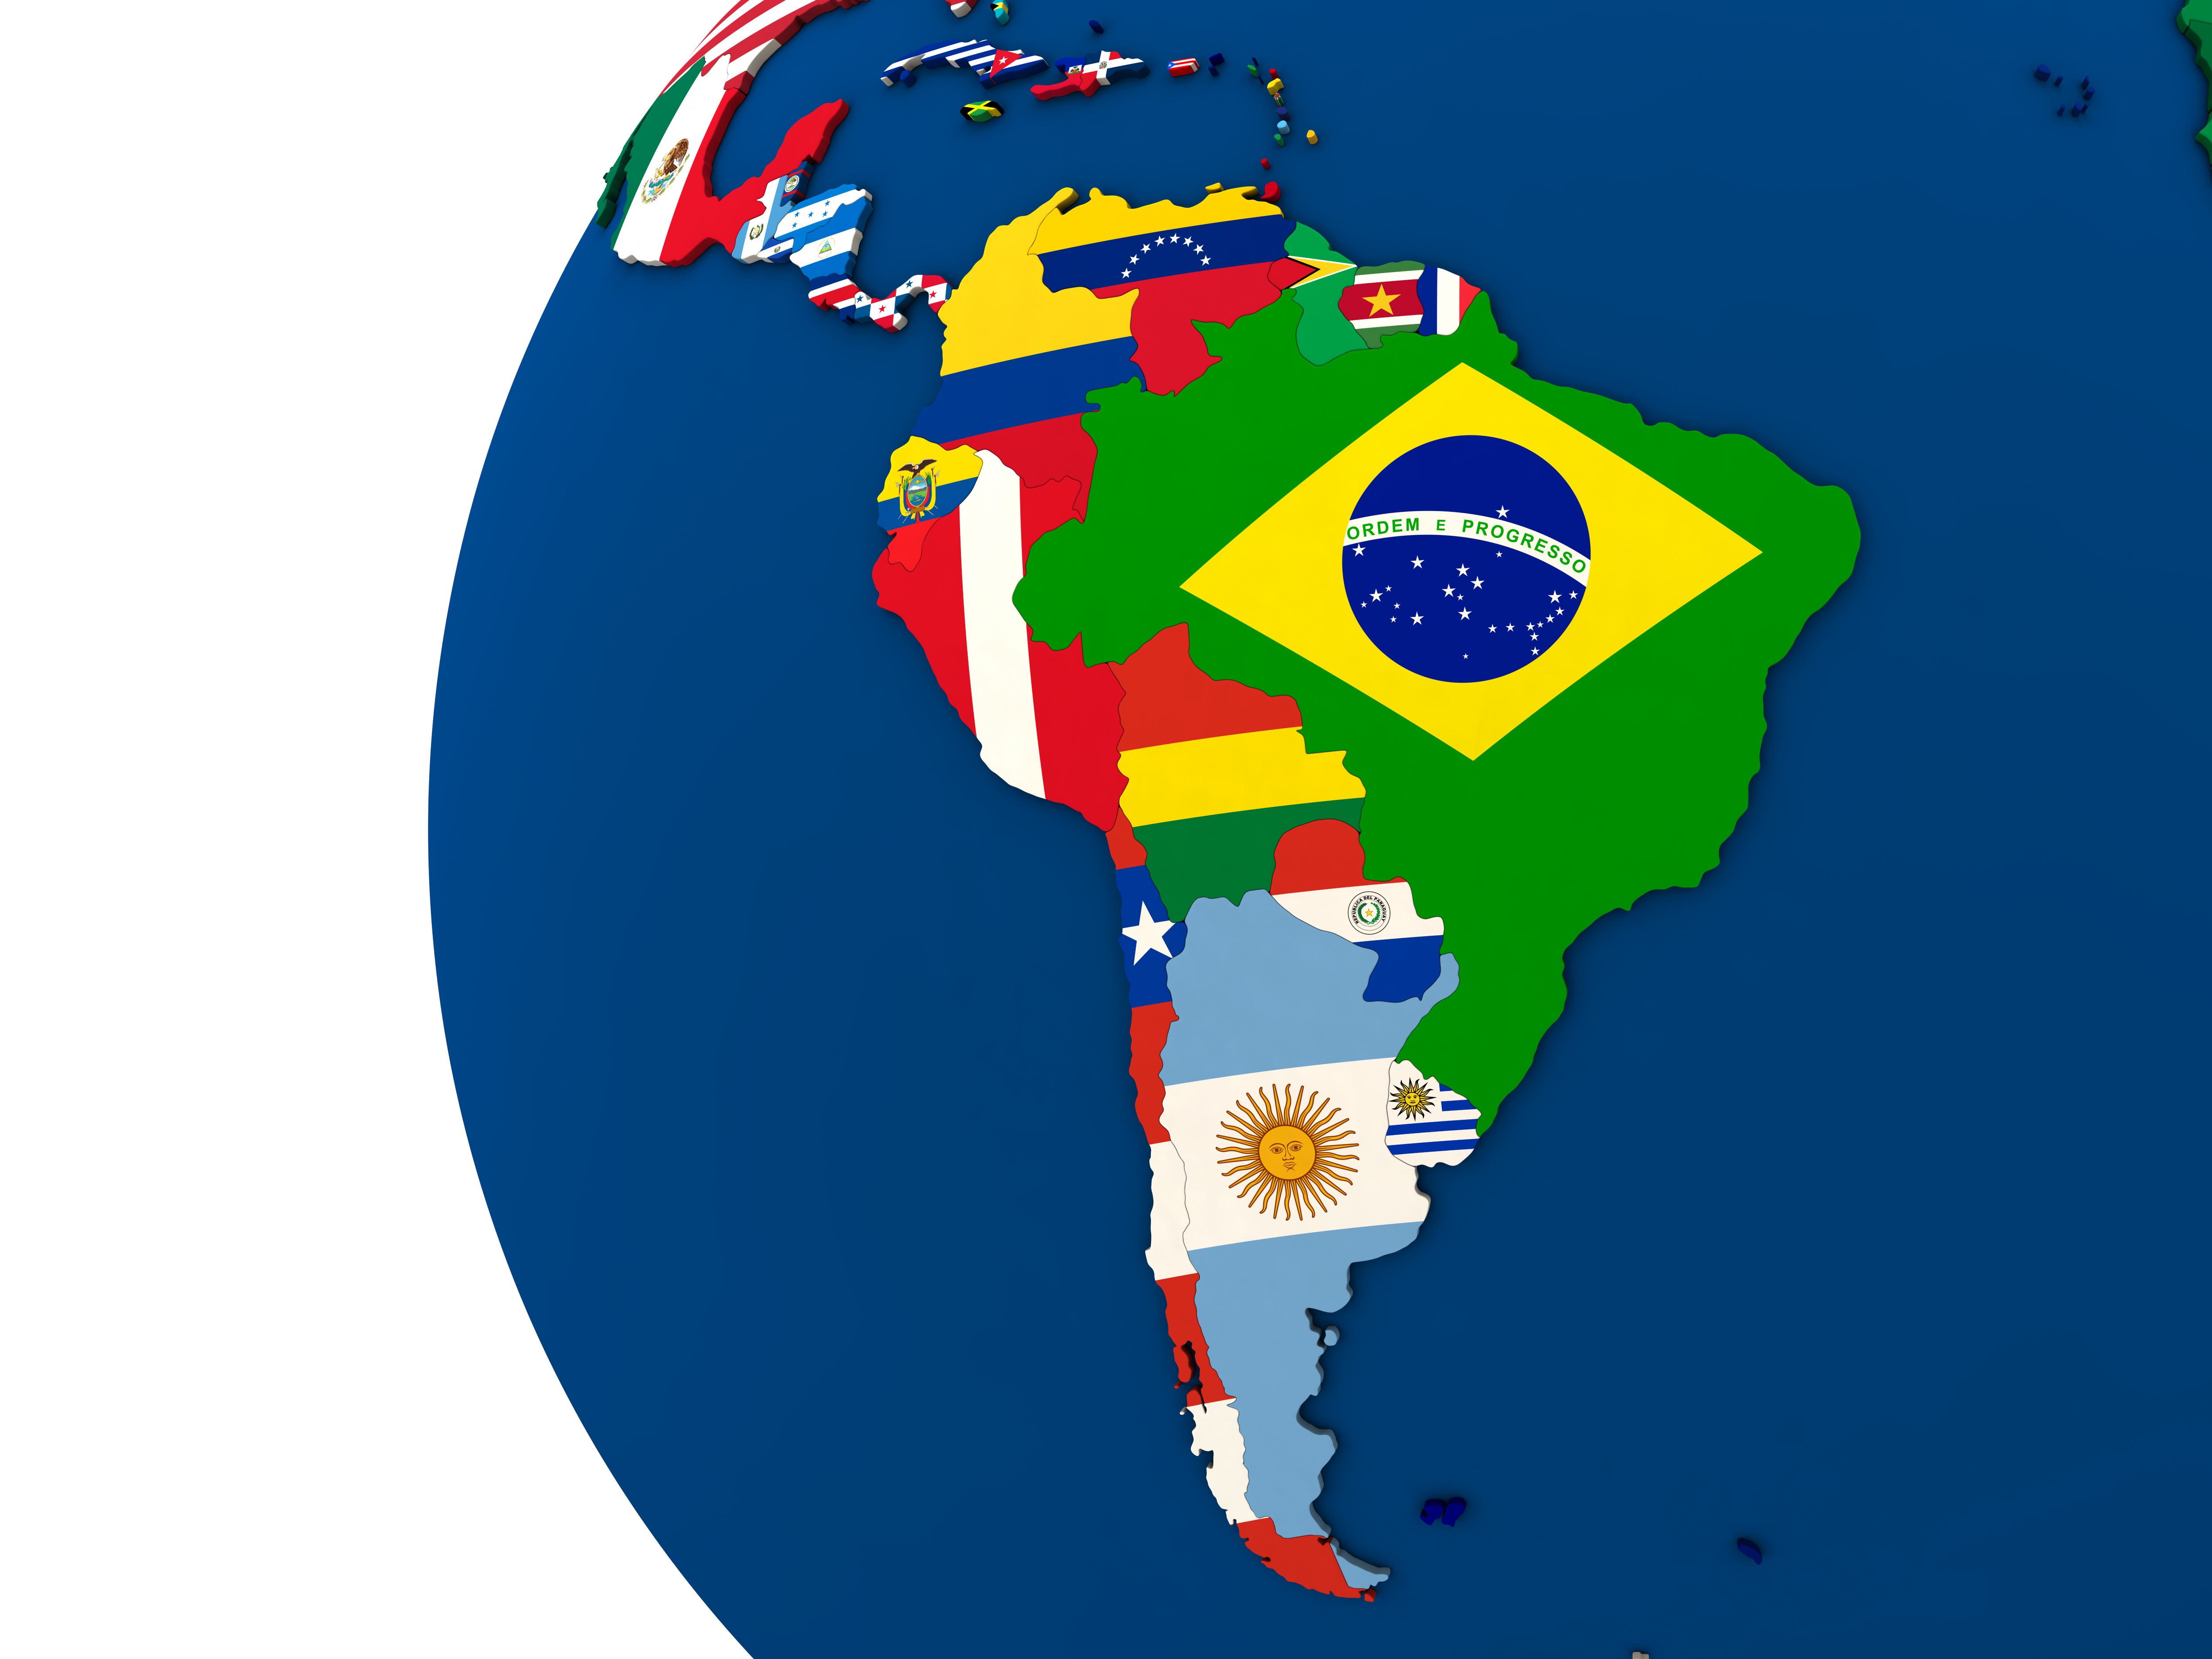 Developing Business in Latin America in 2020